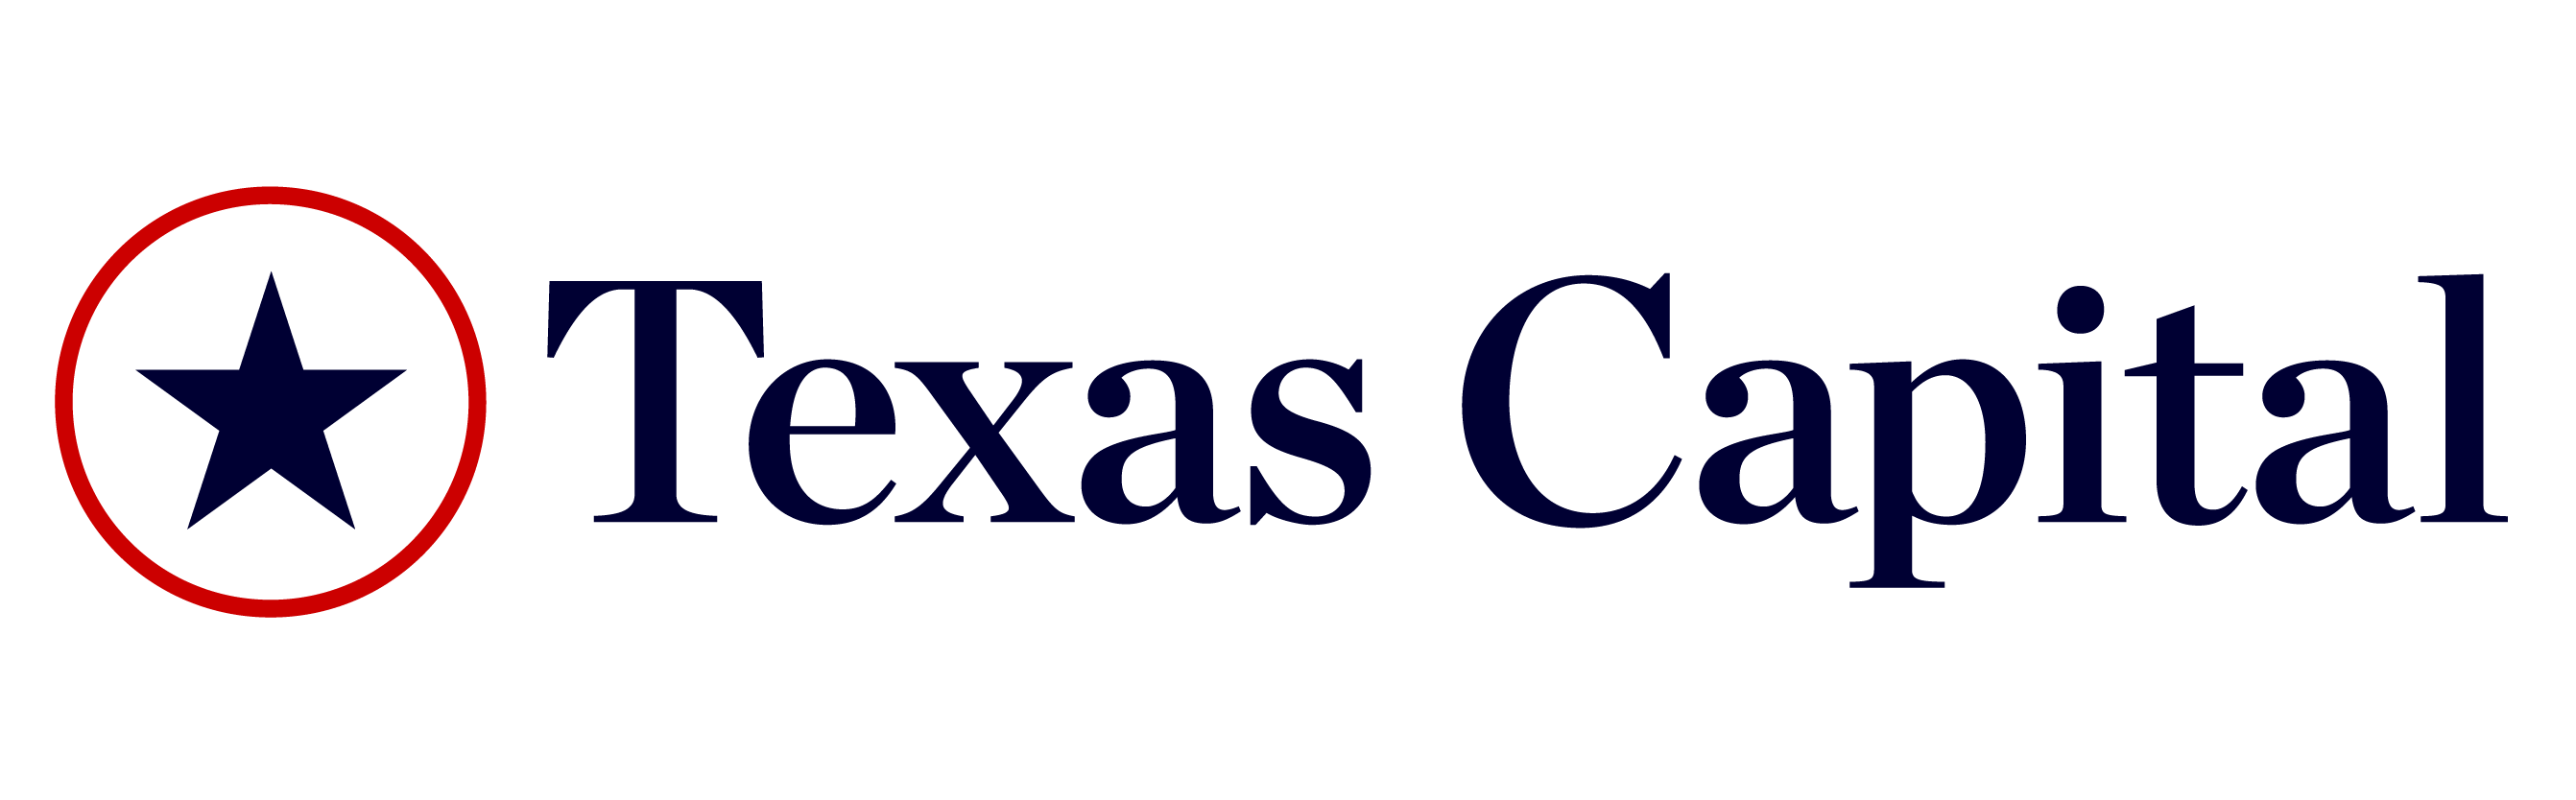 Texas Capital Partnership With Texas Heavenly Homes Image